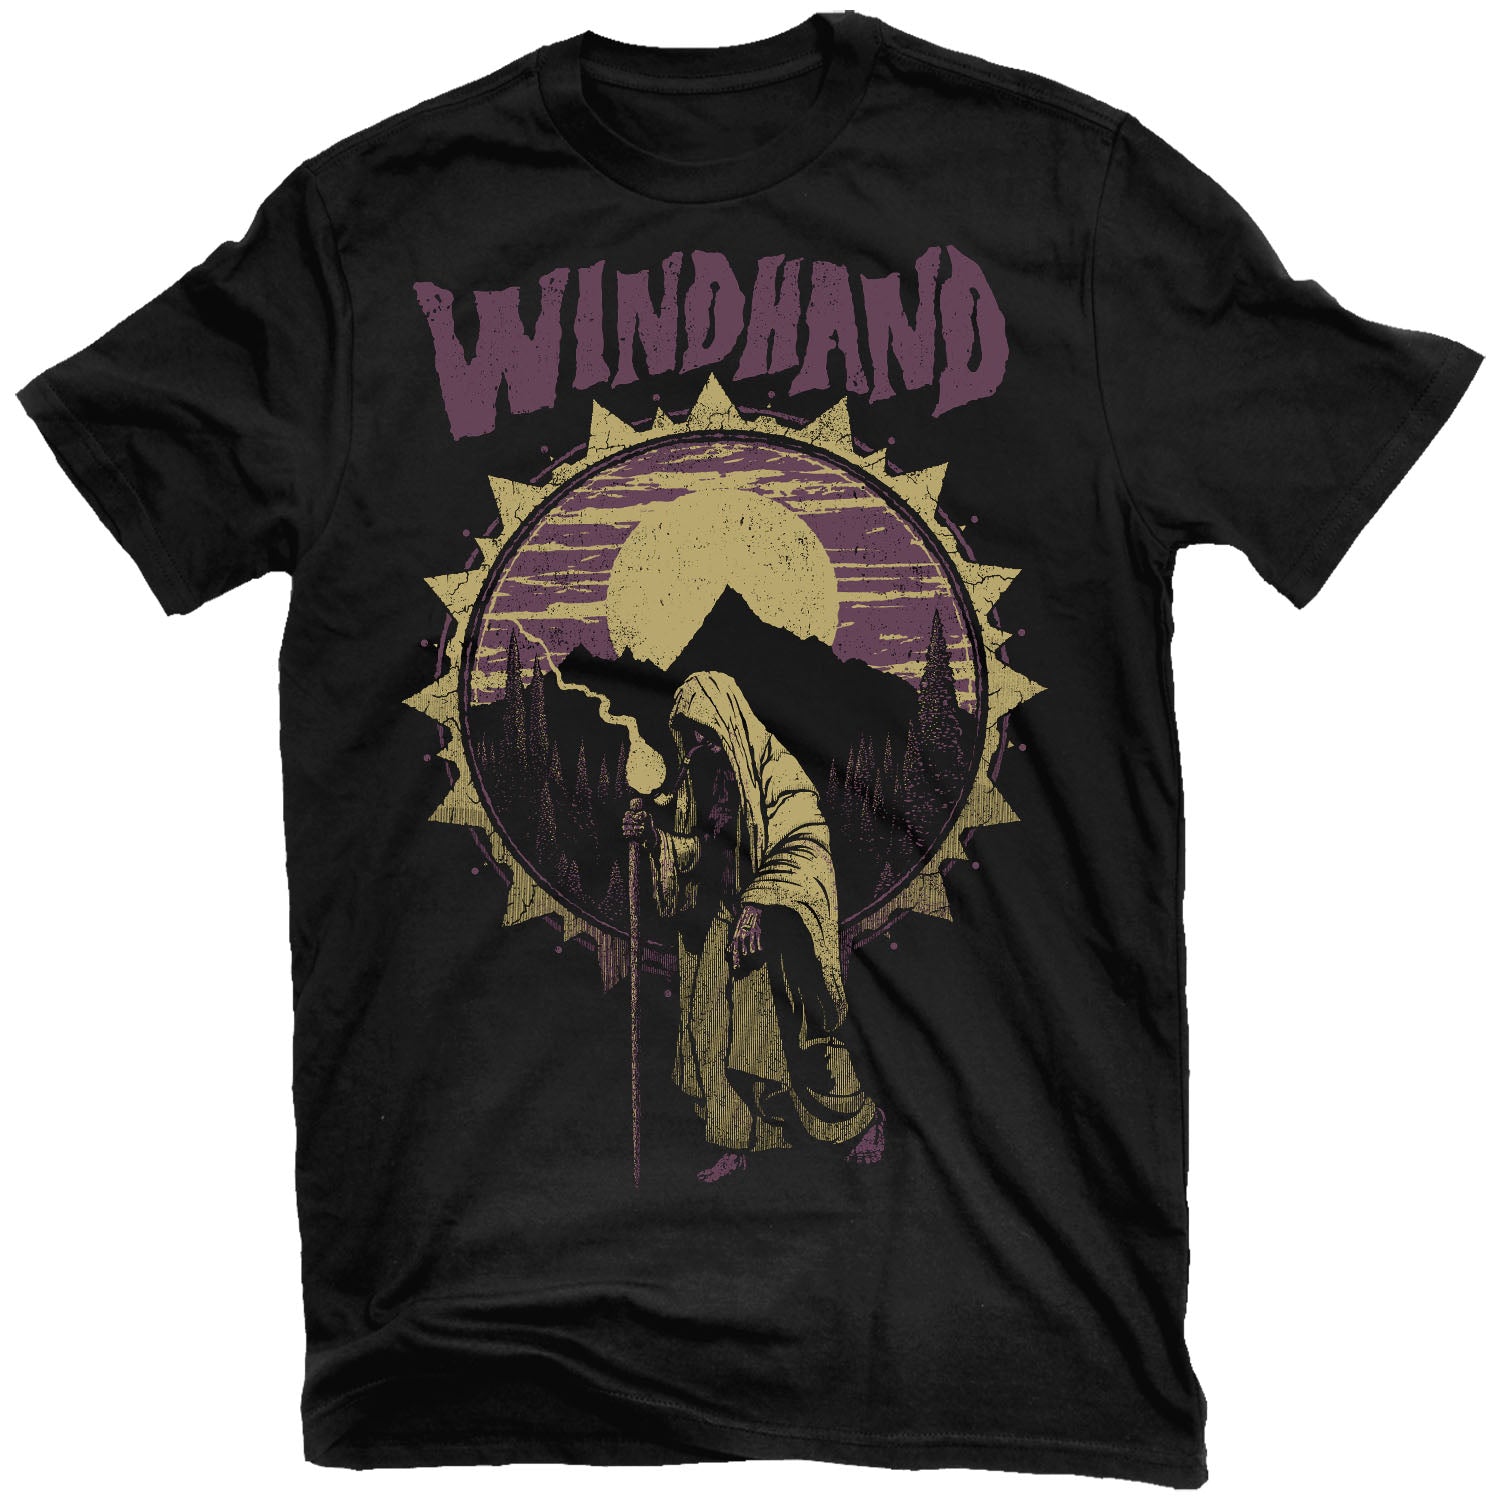 Windhand "Pilgrim's Rest" T-Shirt